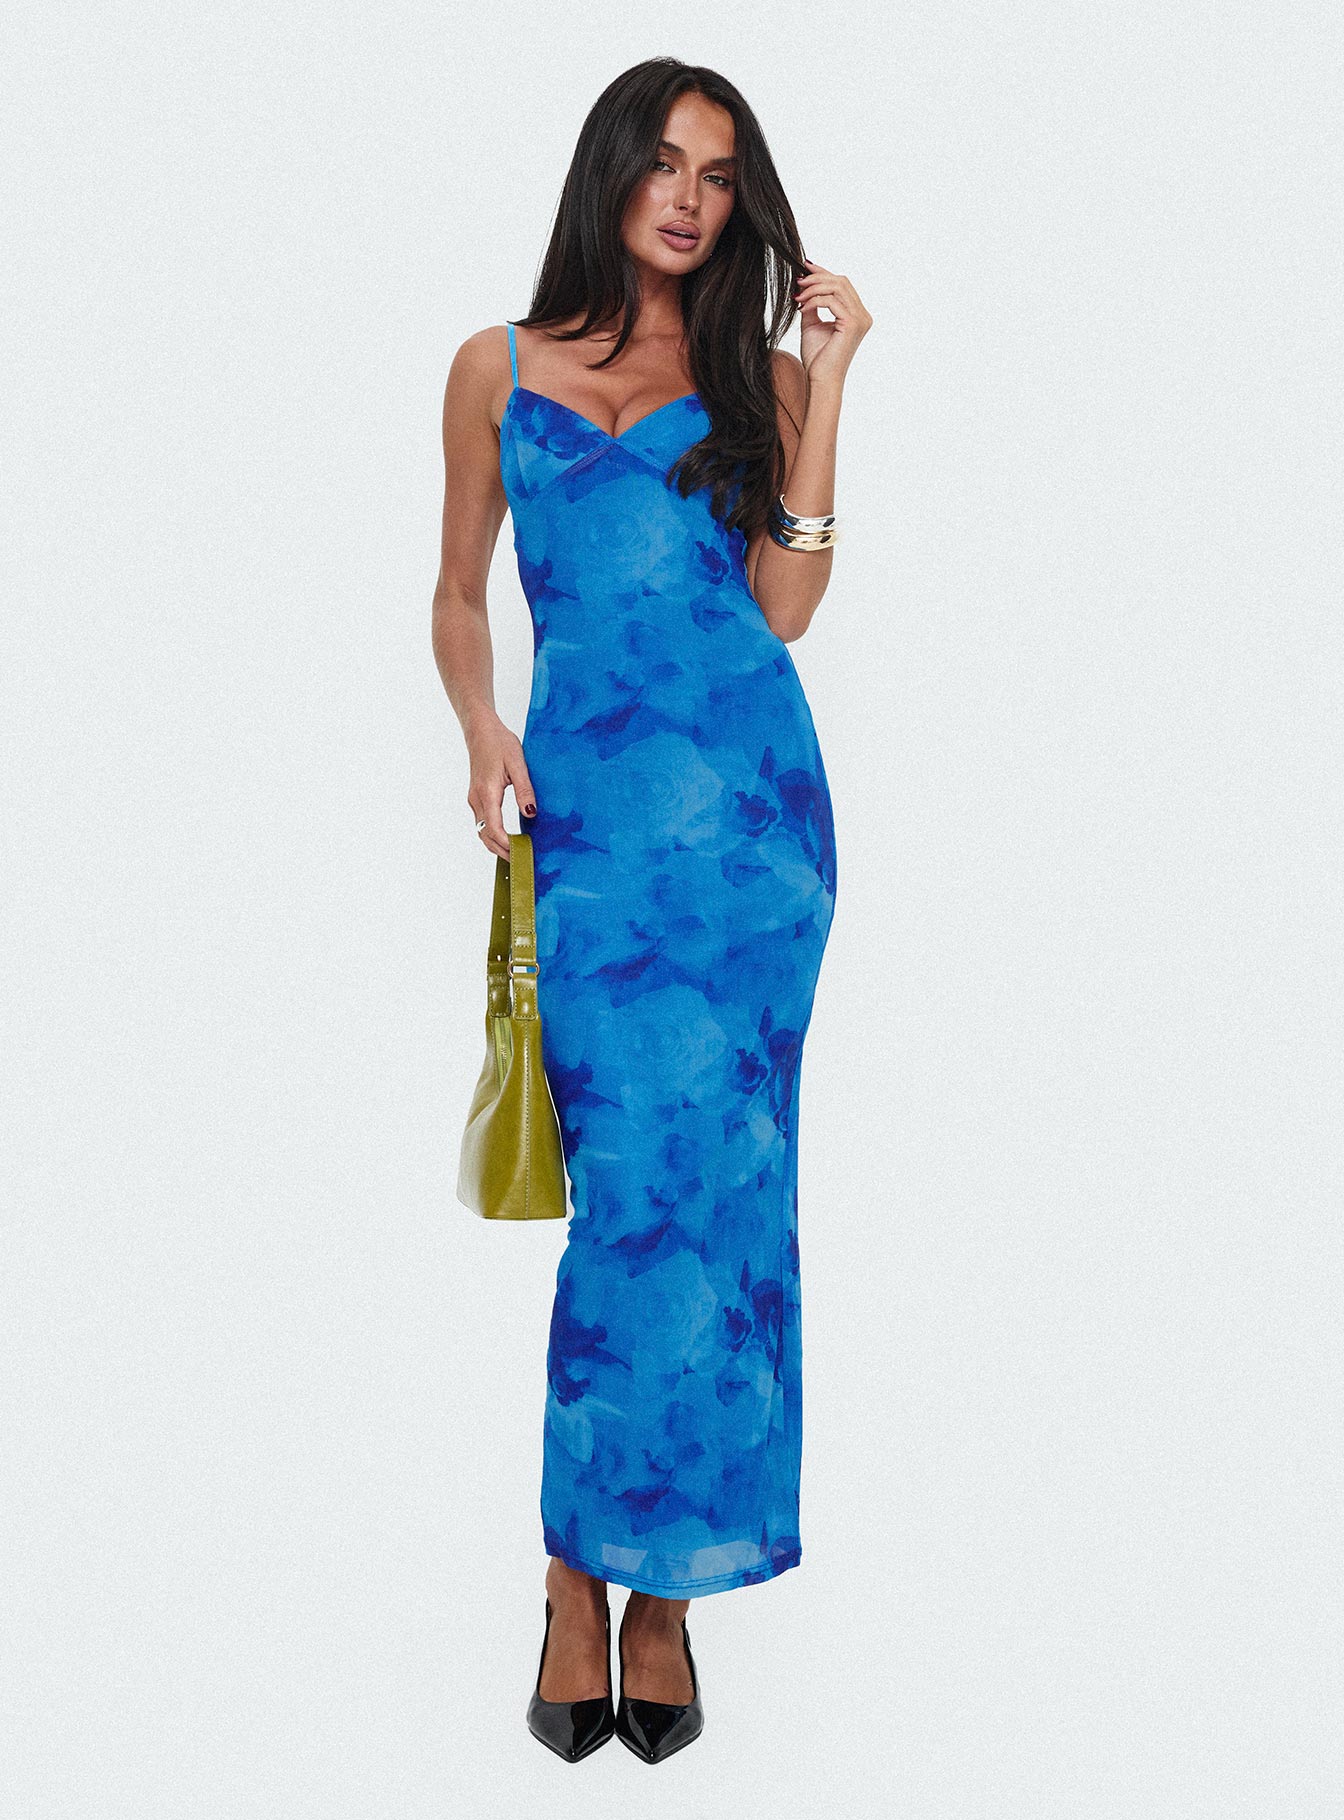 Shop Formal Dress - Hathaway Maxi Dress Blue Floral third image